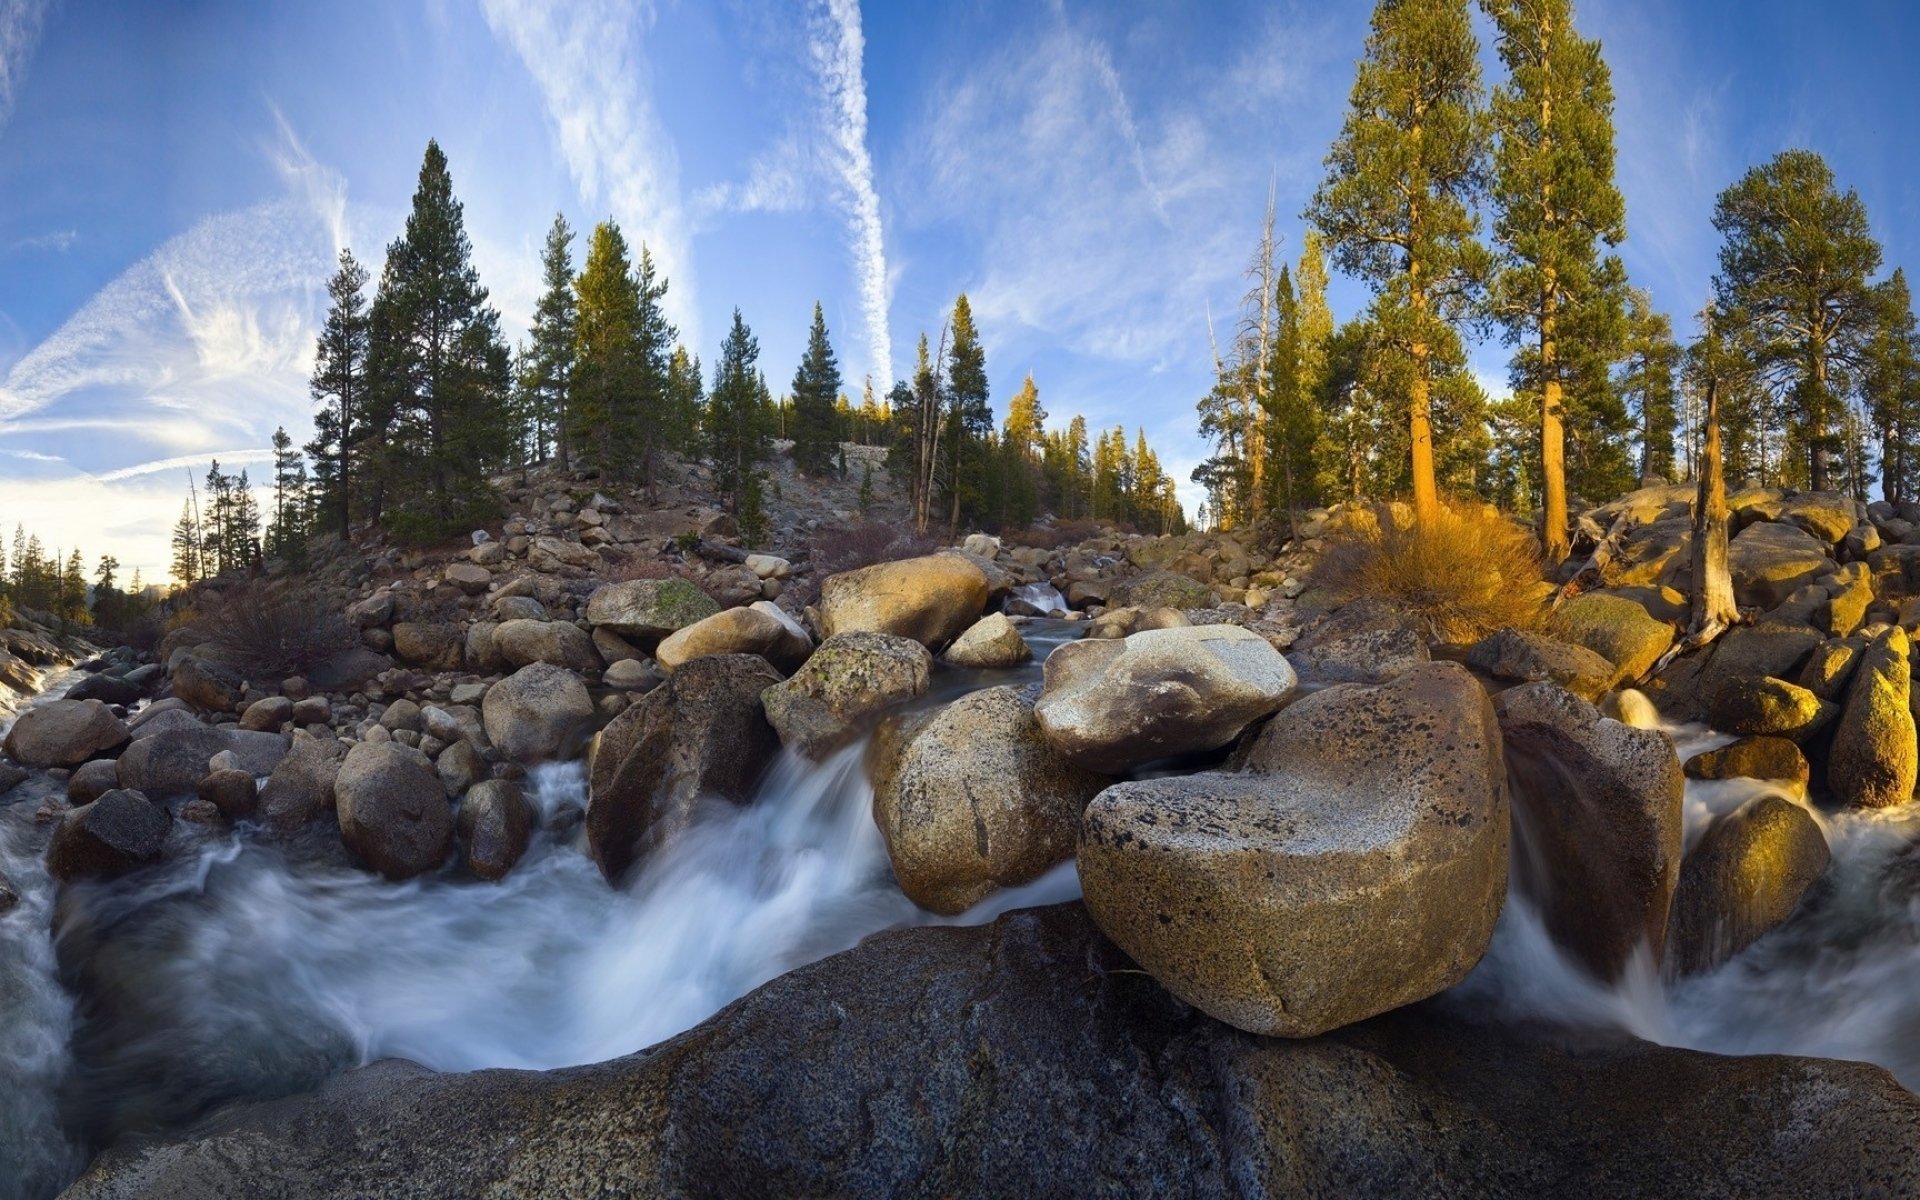 Stone river. Камни в природе. Каменный пейзаж. Природа река горы камни. Природа река лес камни.